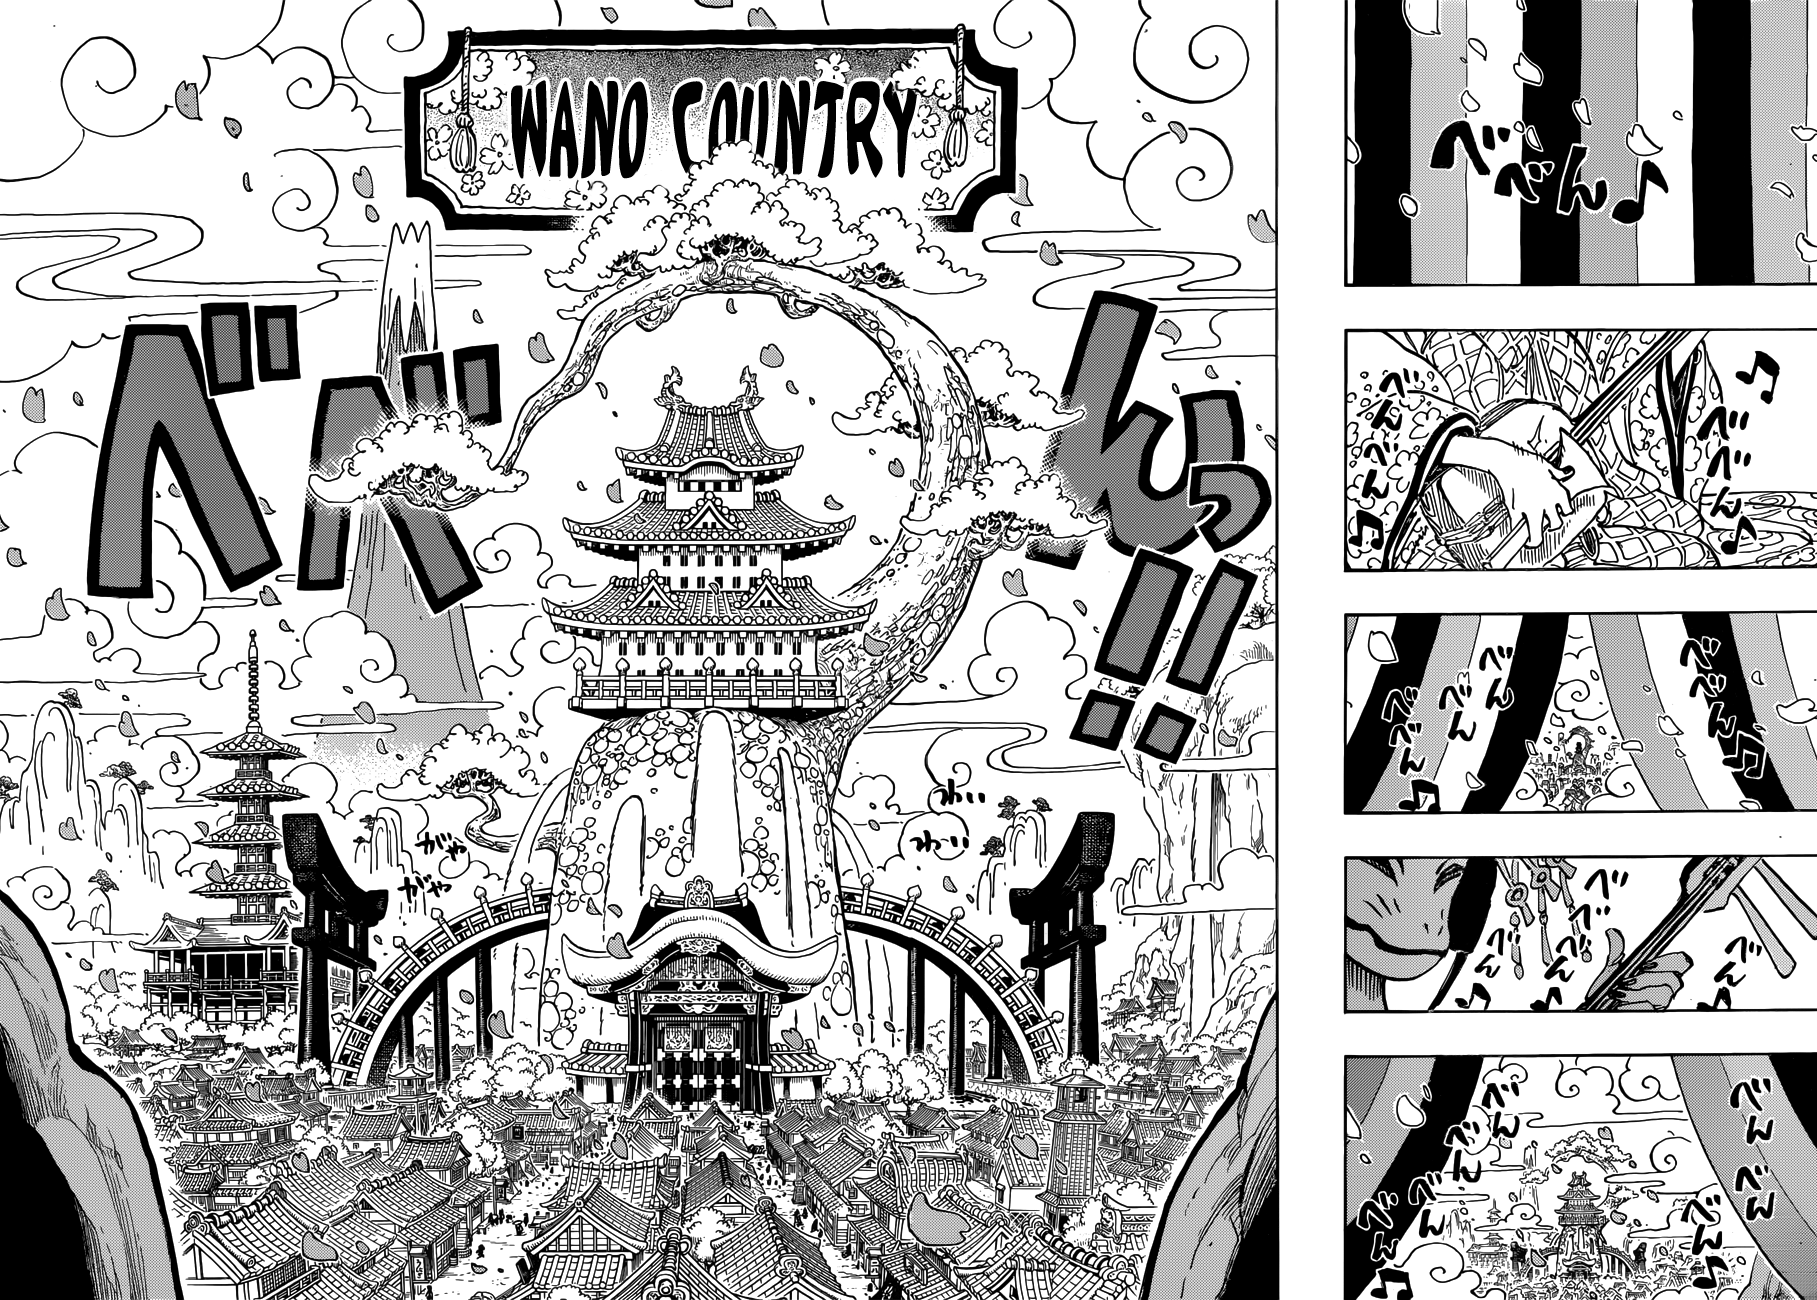 One Piece, Chapter 909 - Seppuku image 09